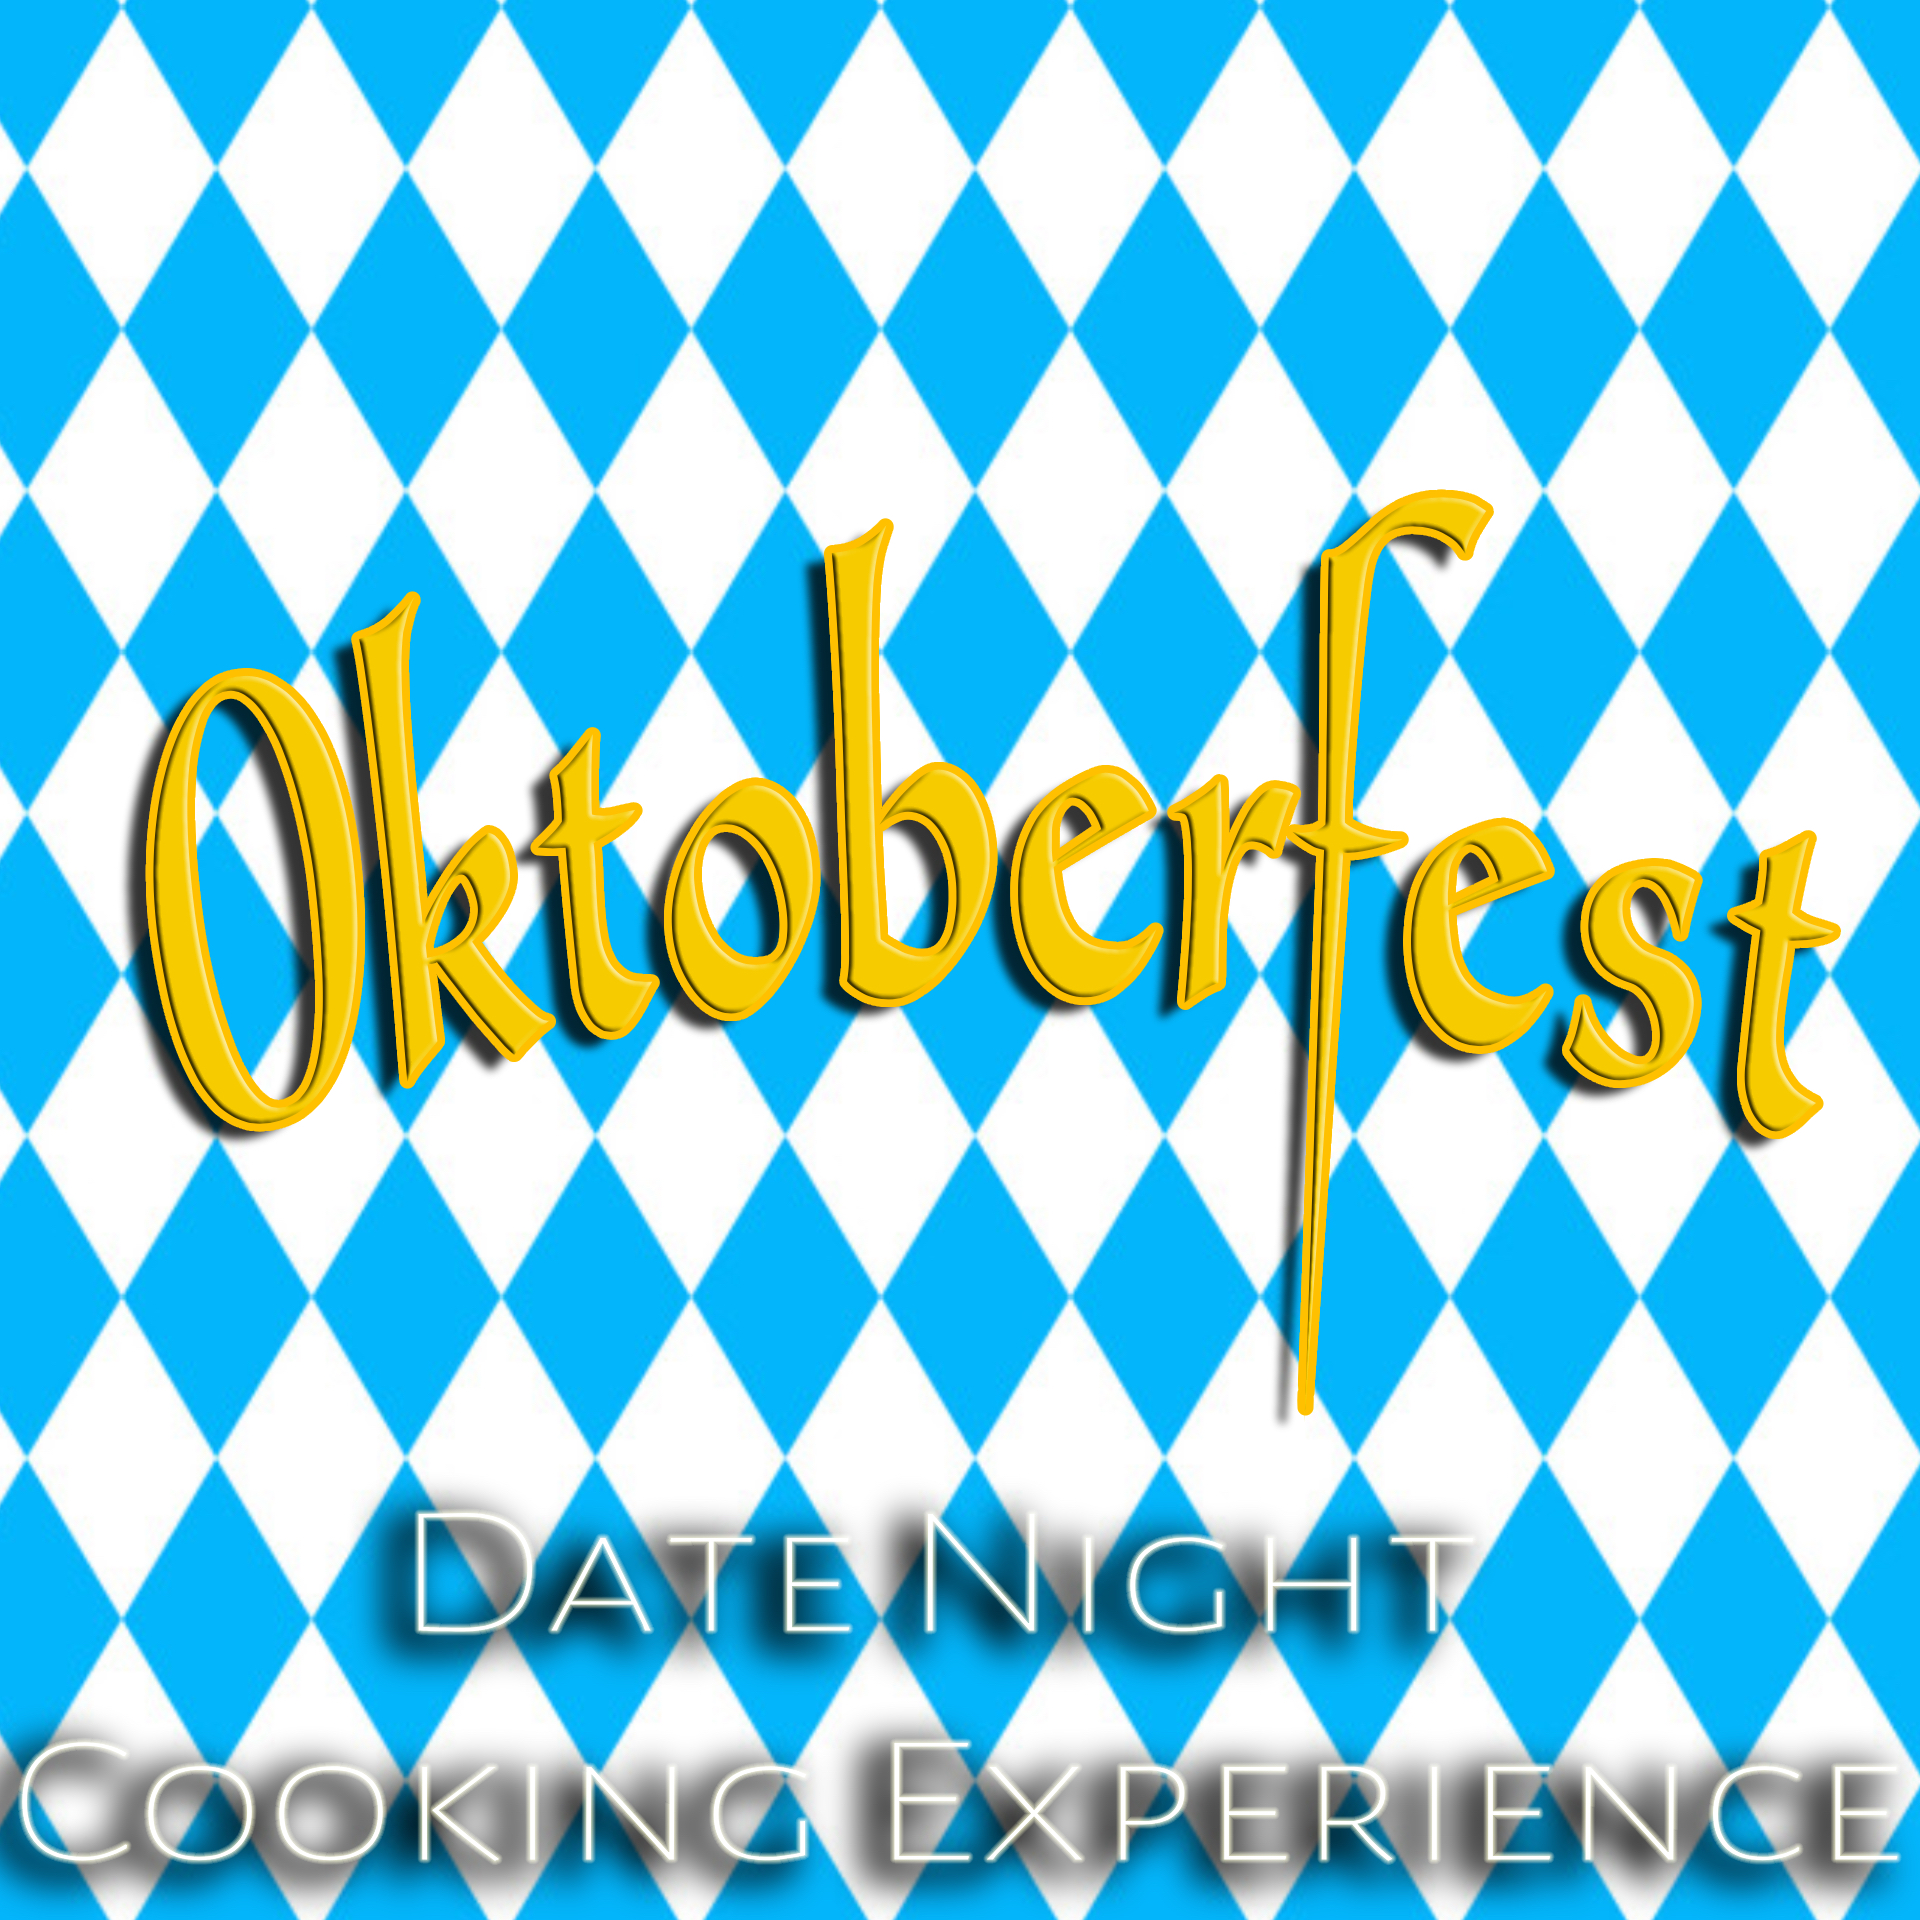 Oktoberfest Date Night Cooking Experience